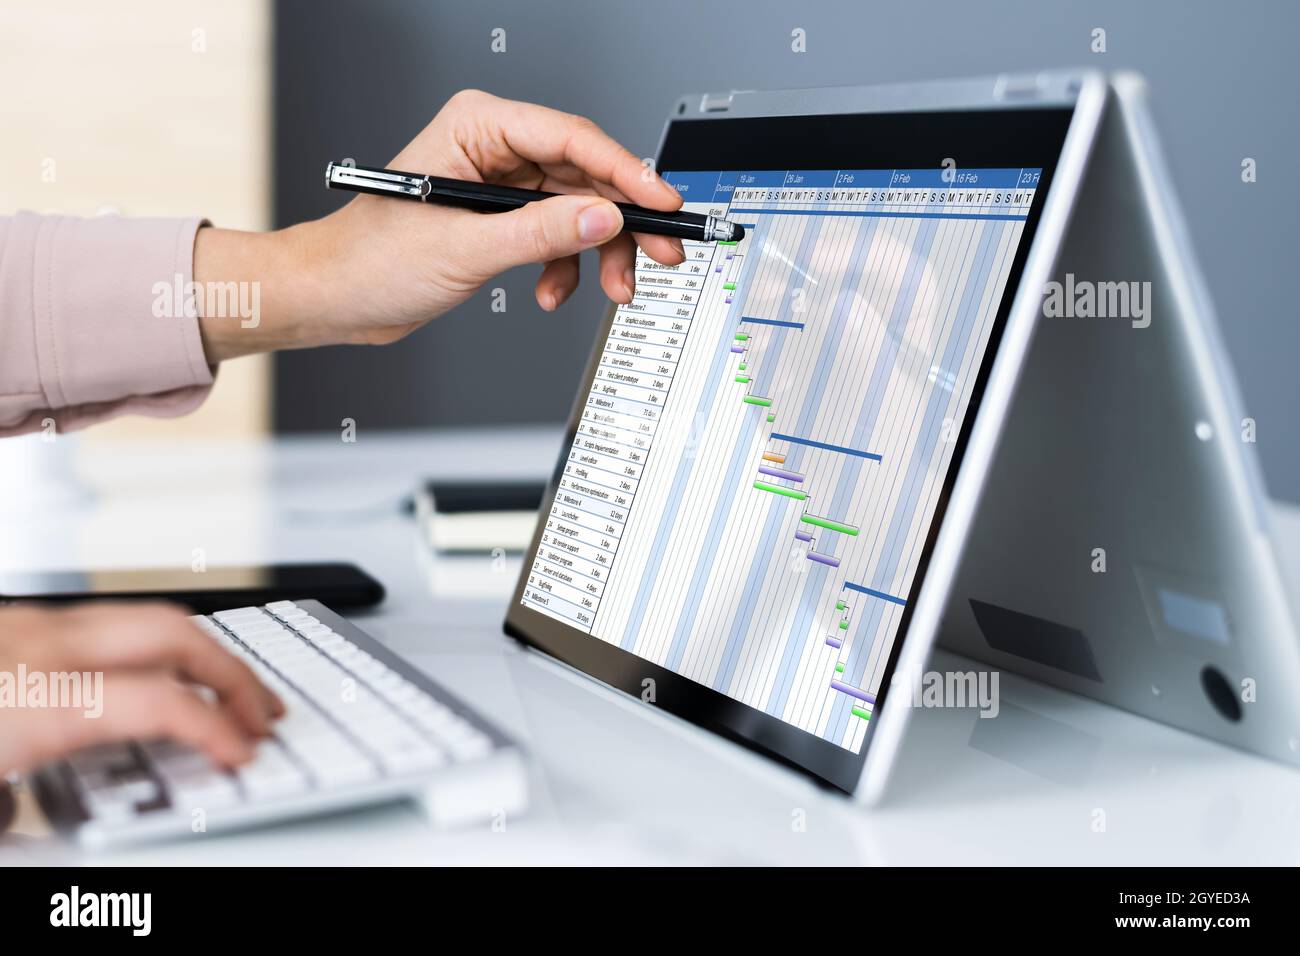 Gantt Project Control On Laptop. Digital Agenda Stock Photo